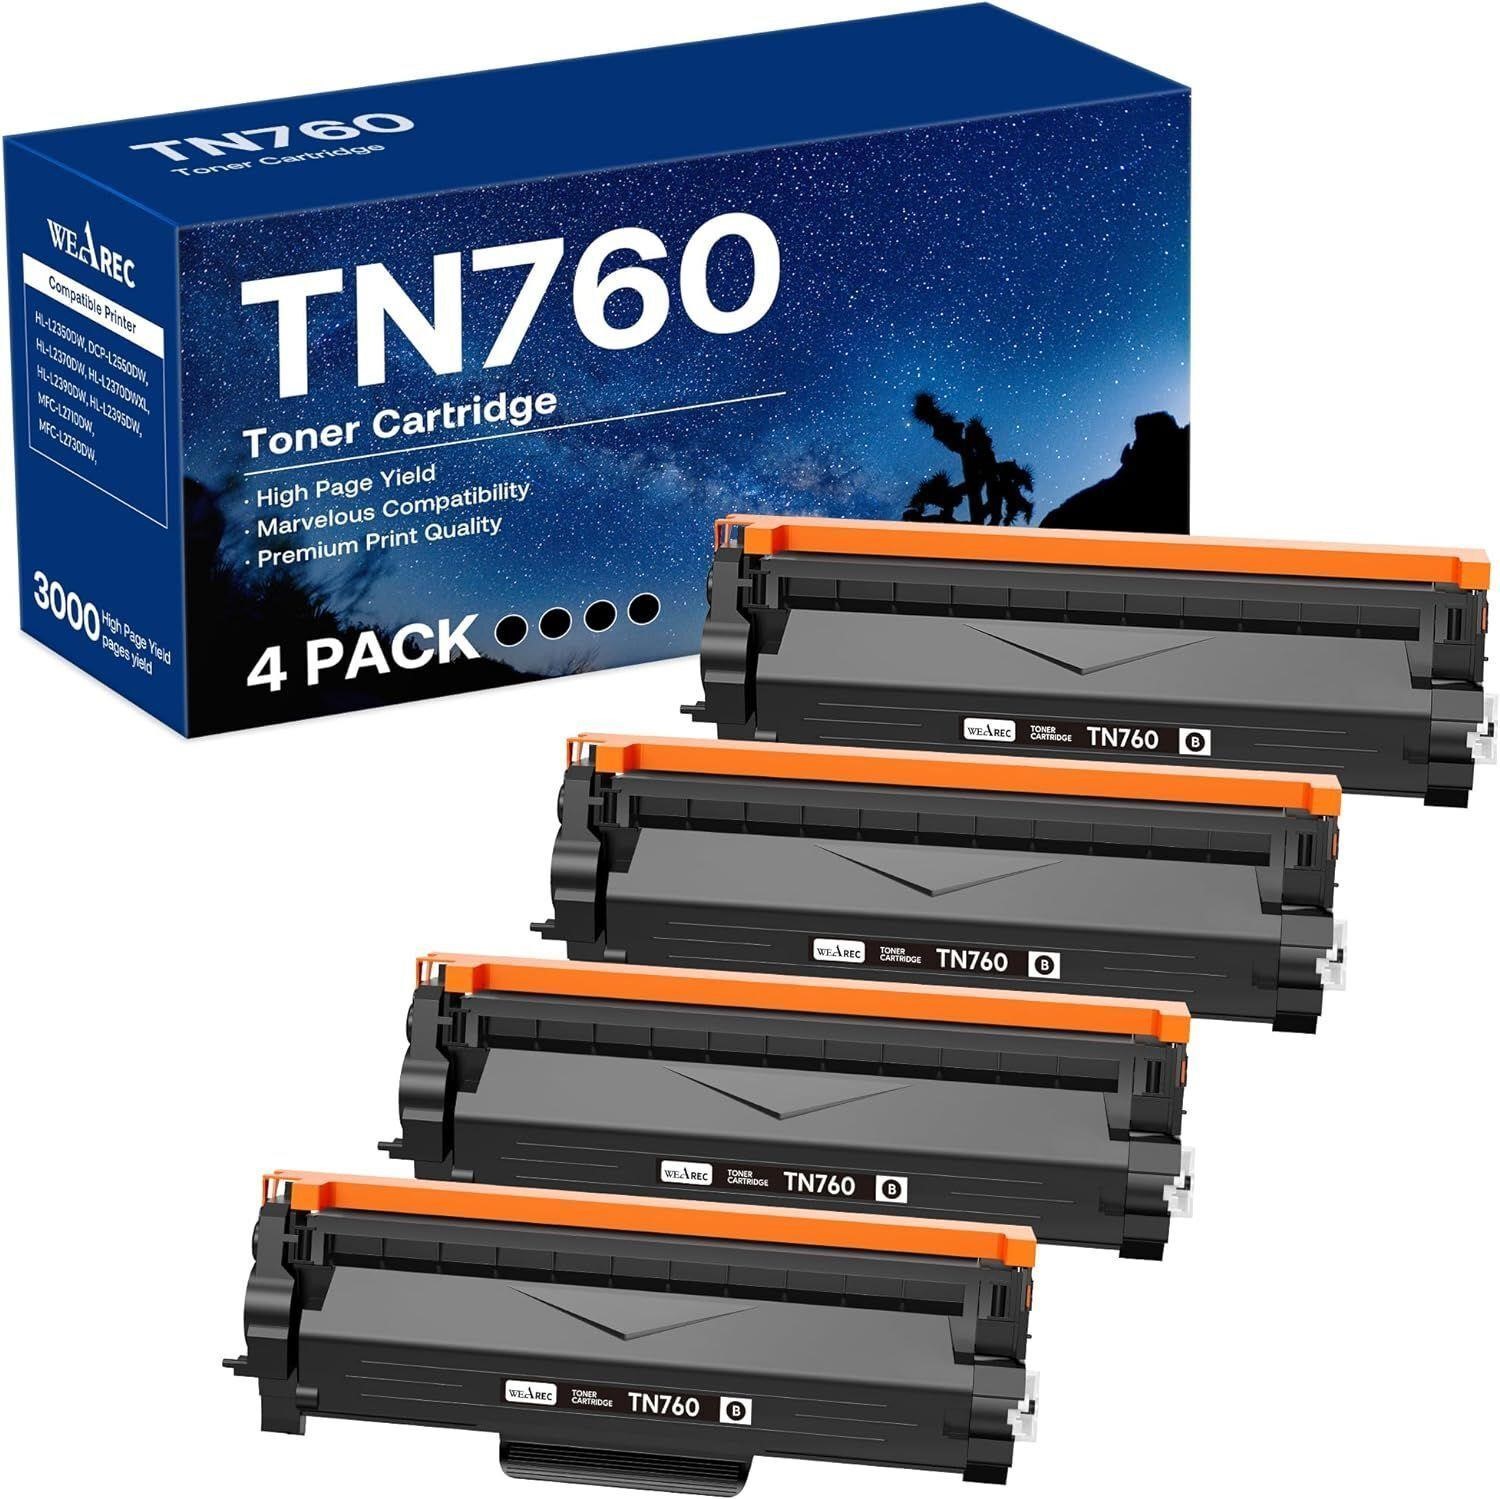 TN760 Toner Cartridge Replacement